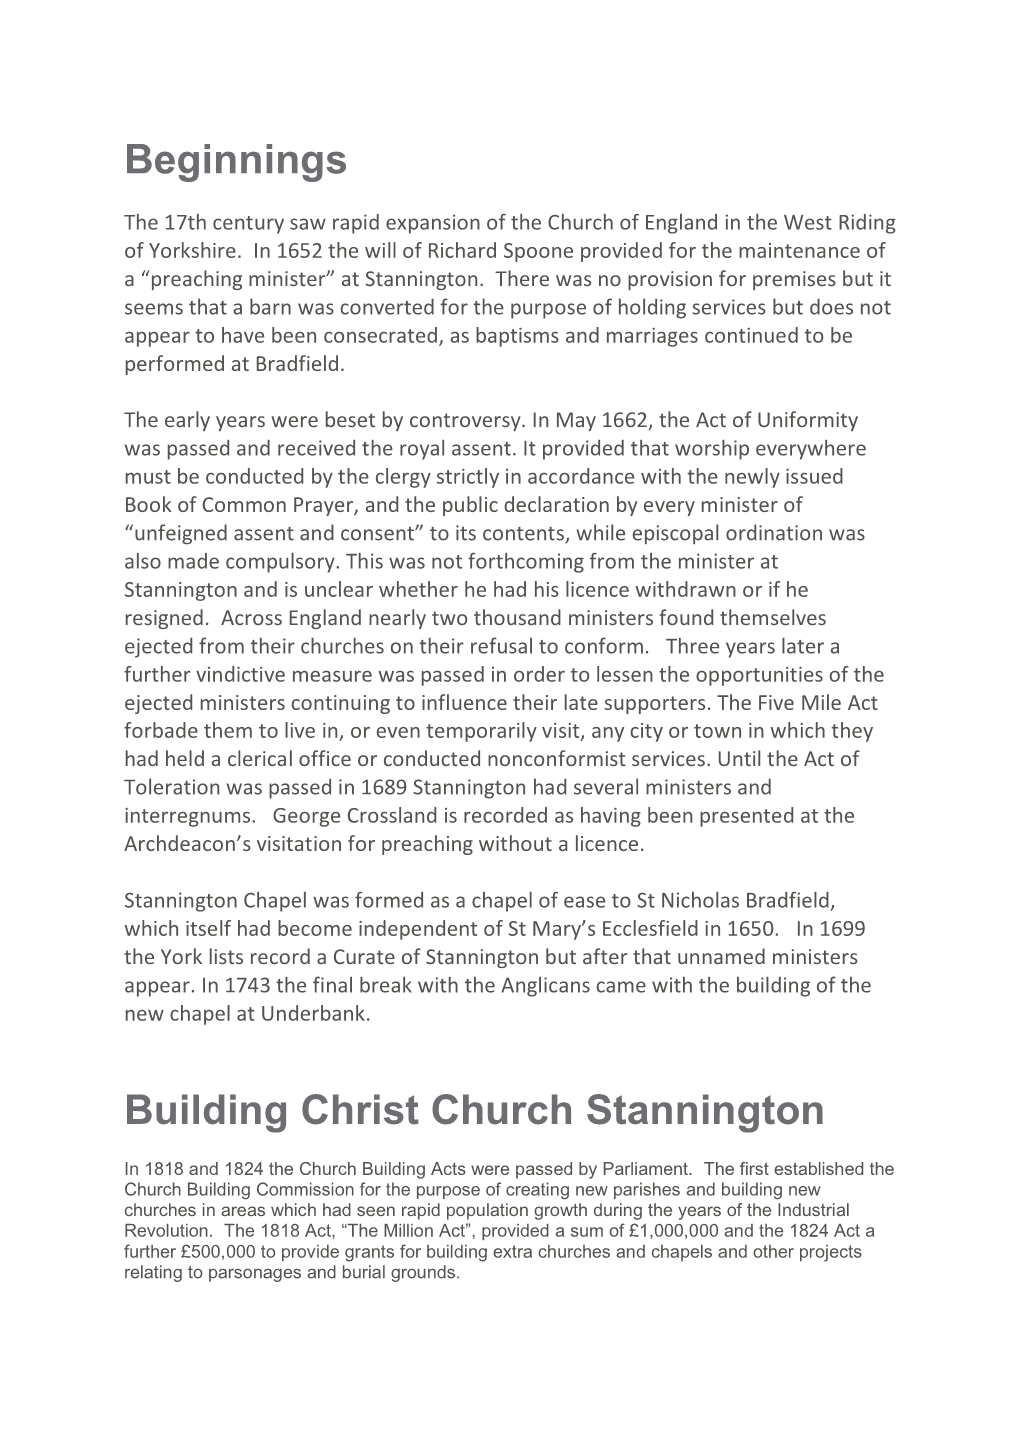 Beginnings Building Christ Church Stannington